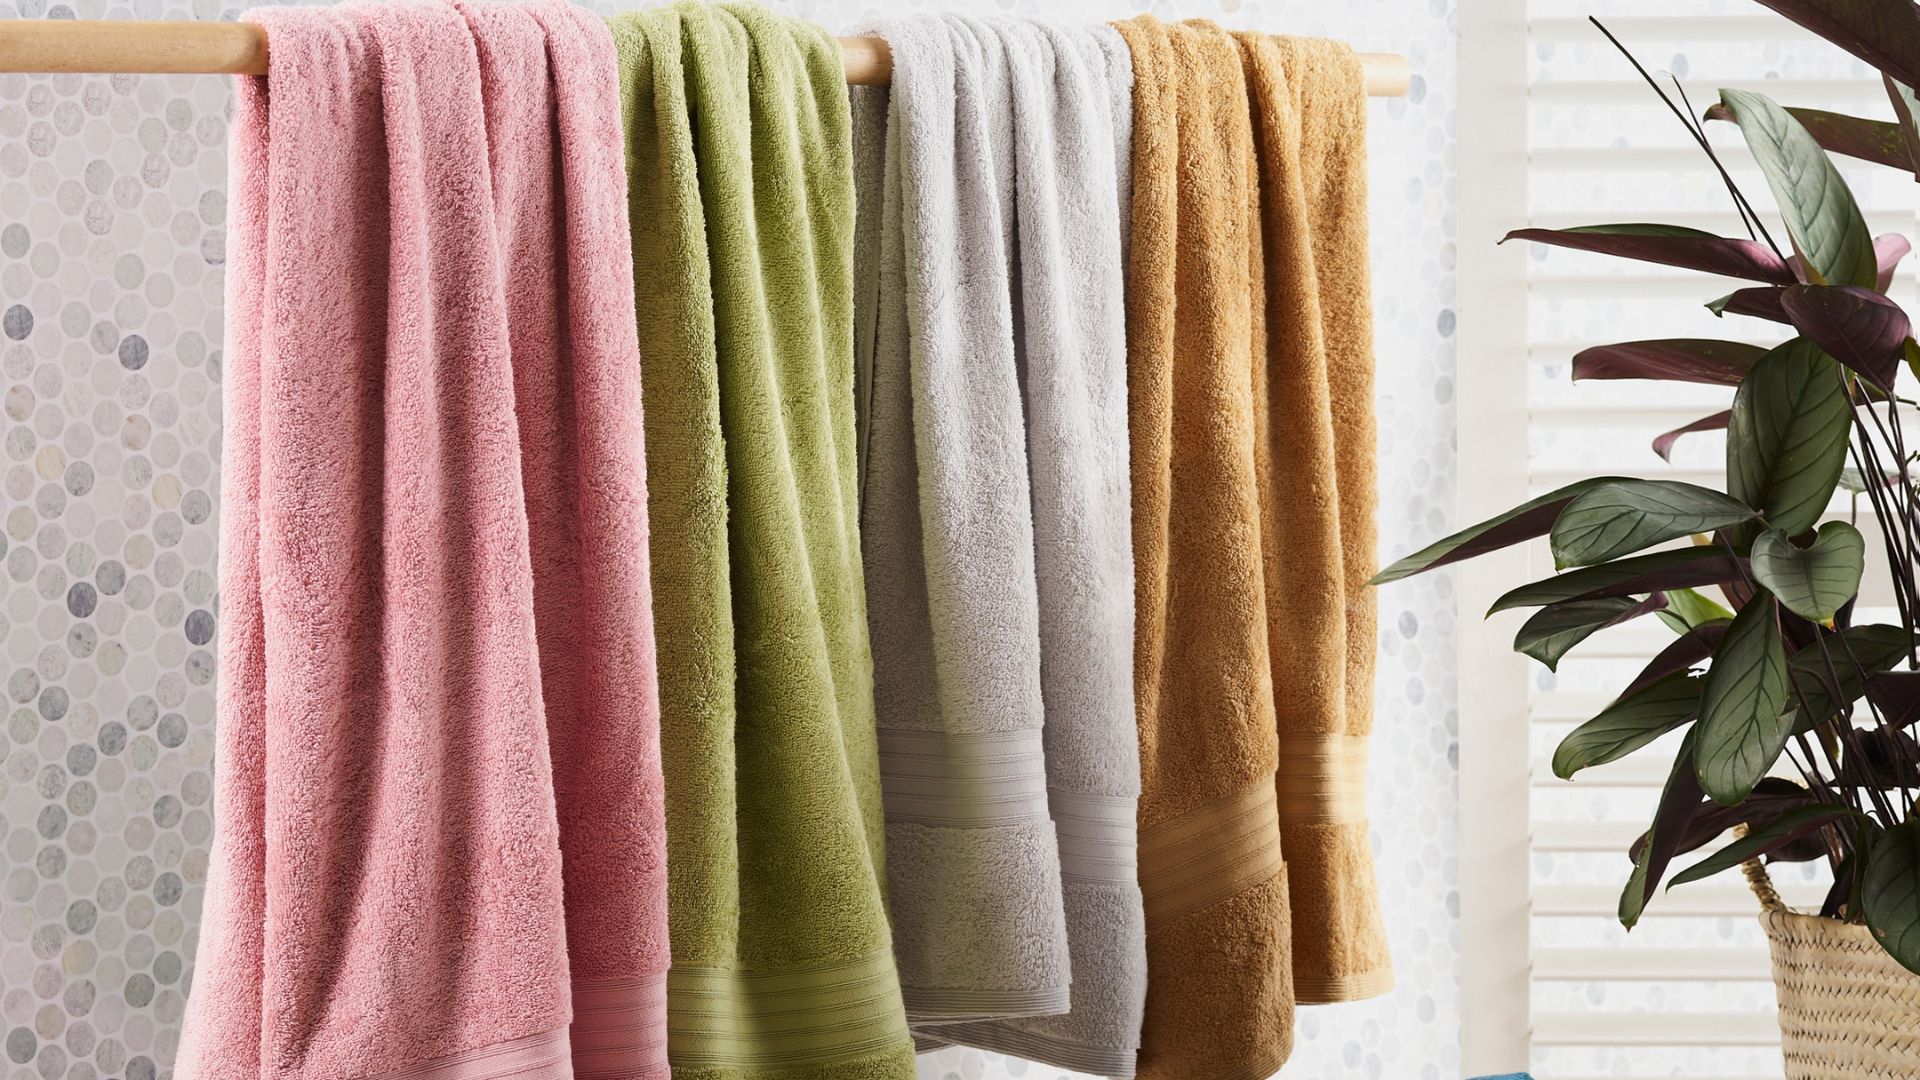 How to make towels soft again